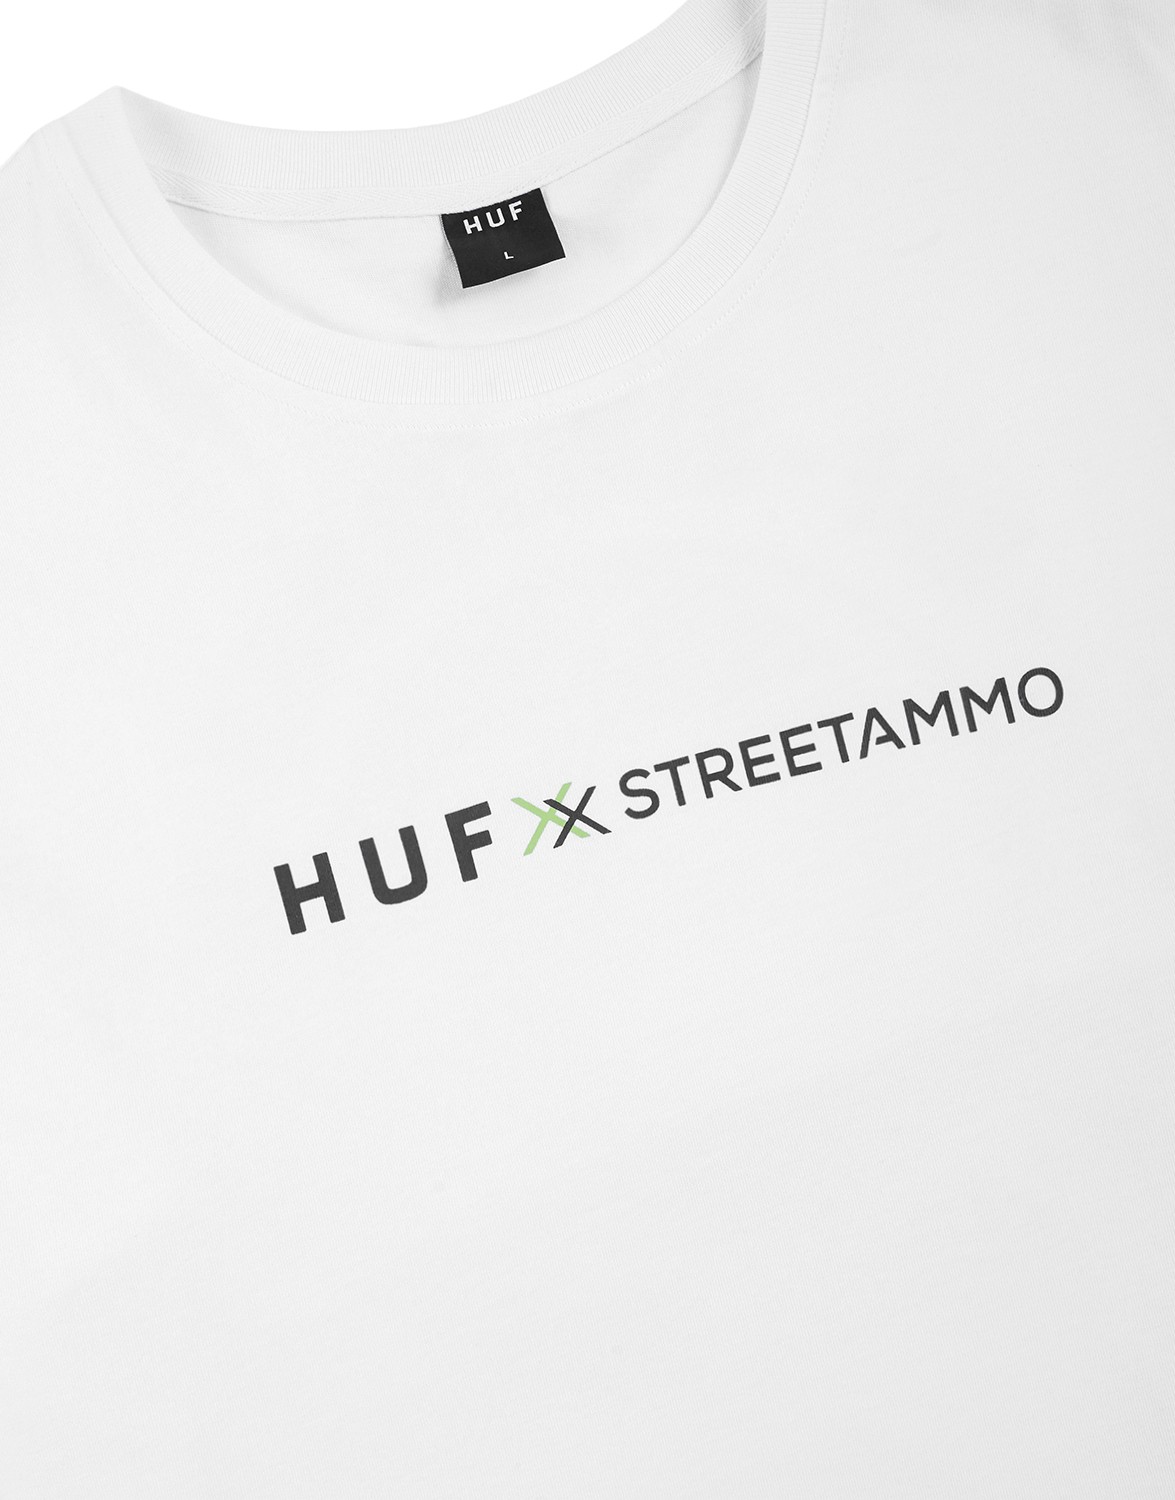 HUF X Streetammo Round Tee